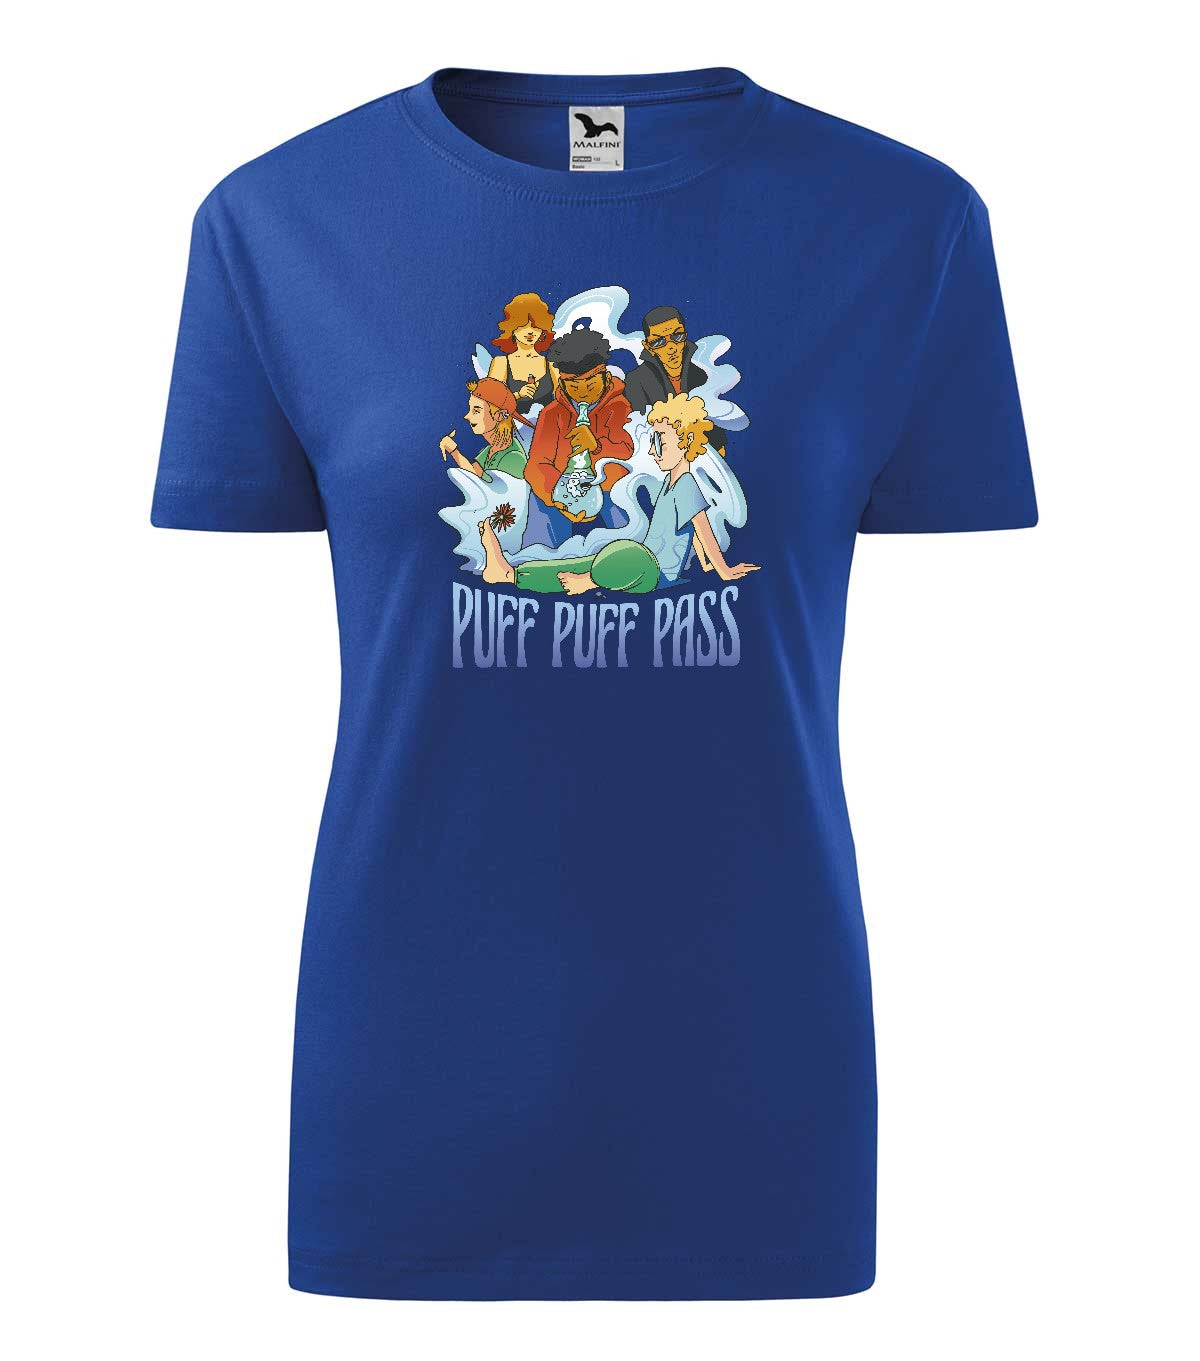 Puff Puff Pass női technikai póló